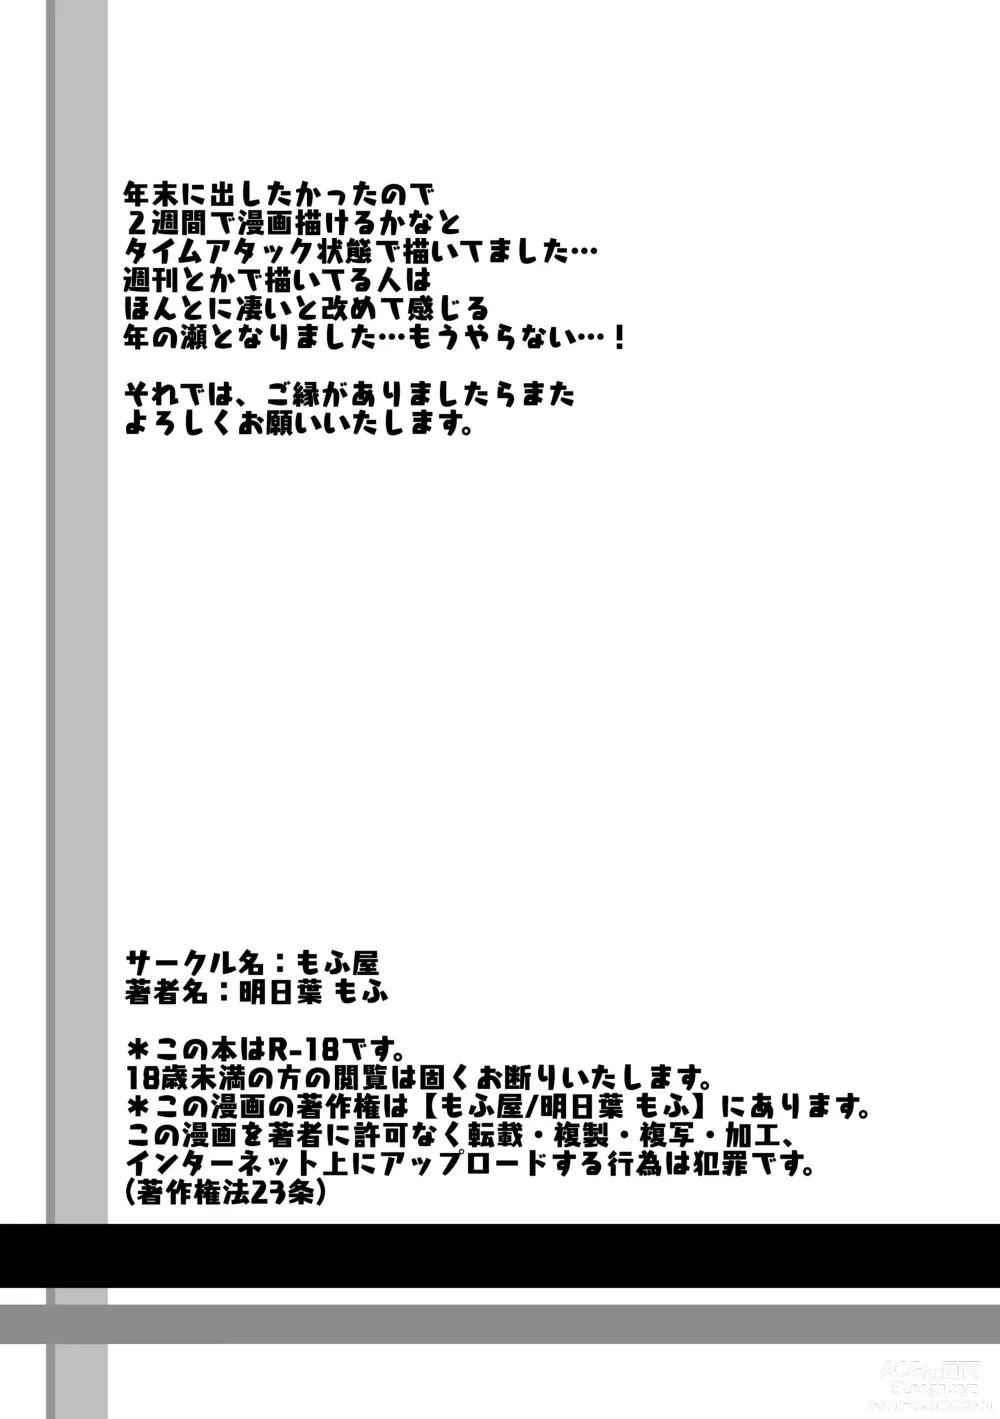 Page 27 of doujinshi Kyuunyuu Kyonshii wa Kyou mo Doushi ni Ikasareru